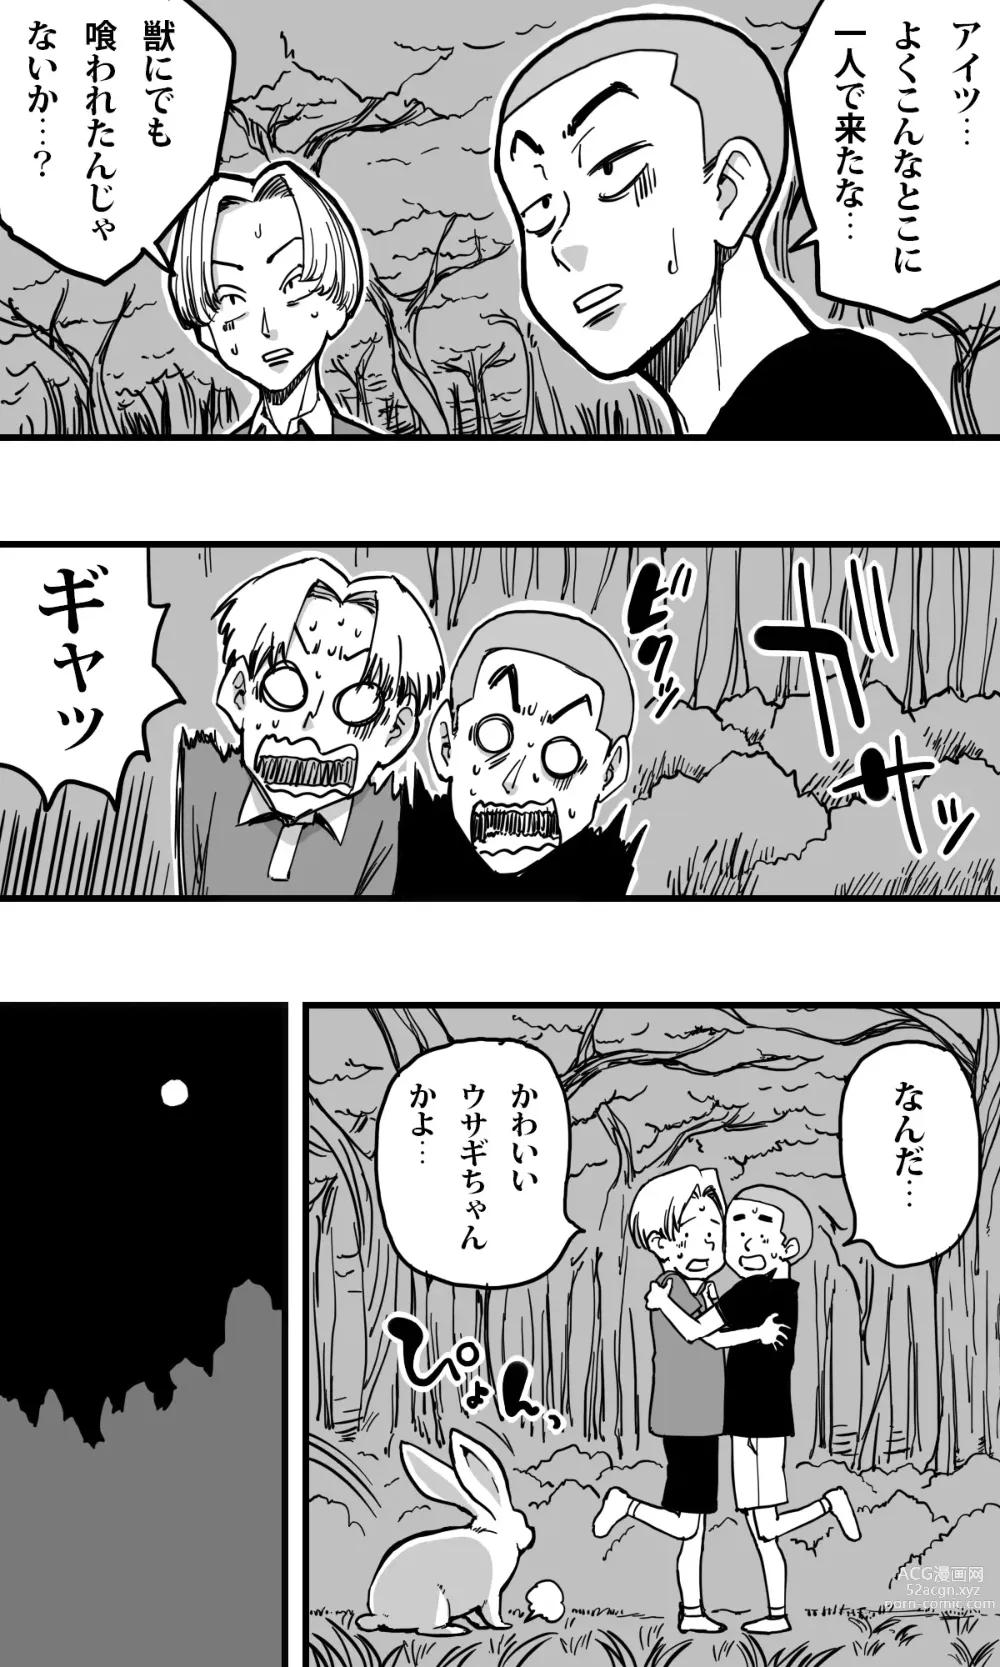 Page 5 of doujinshi POLMANGA_09